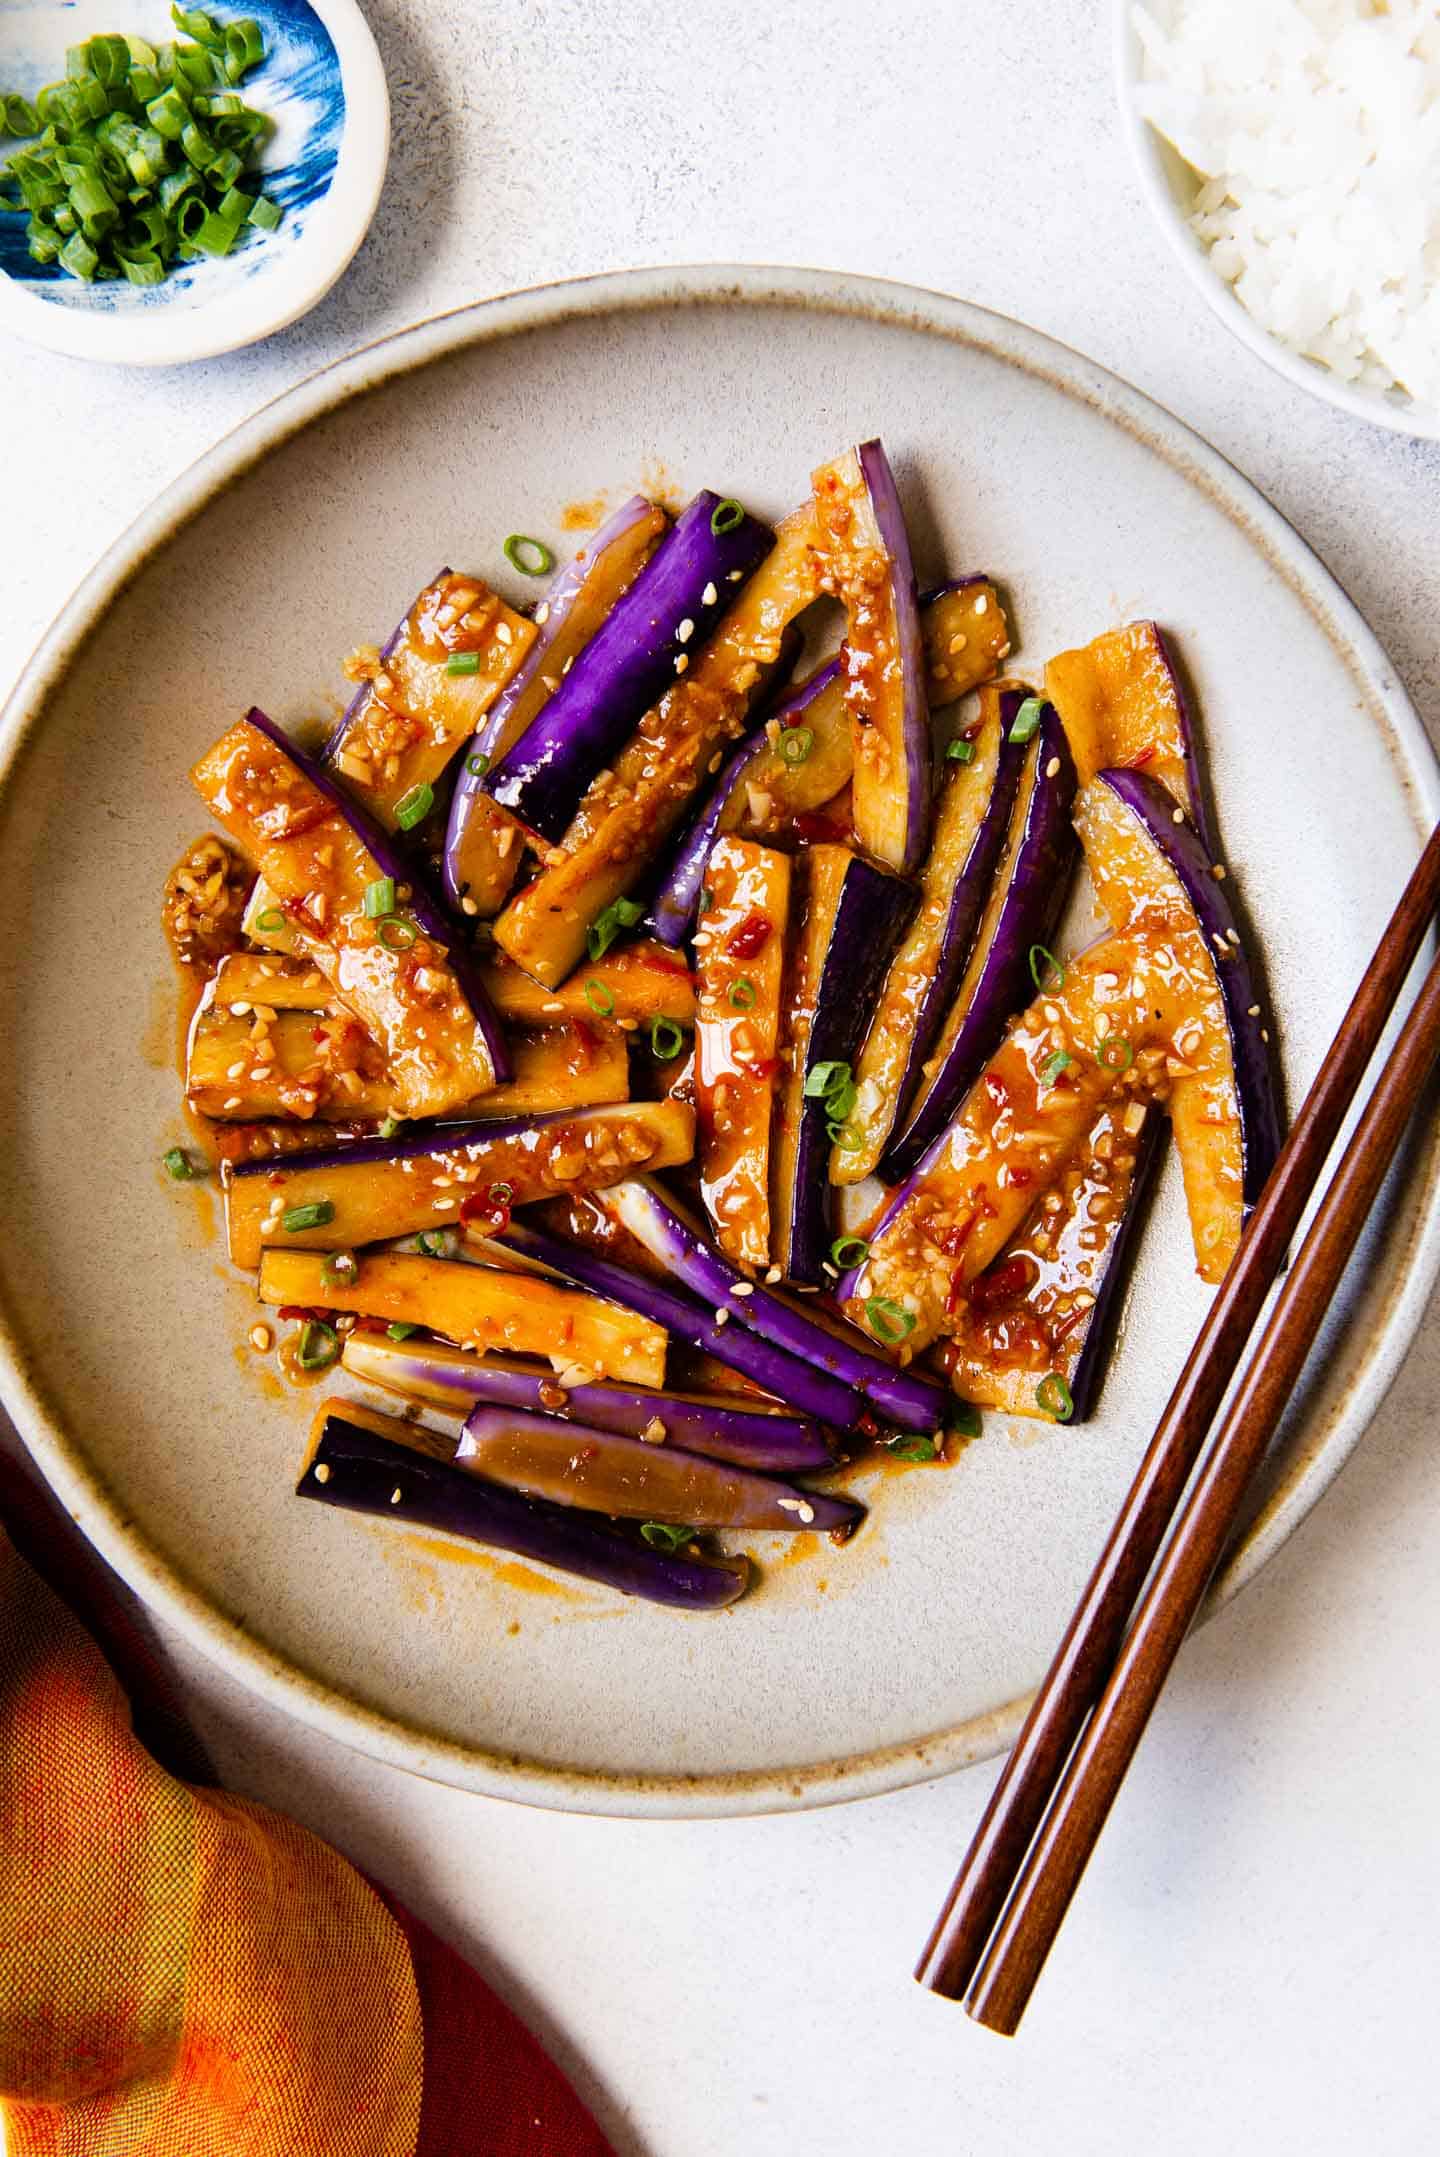 Spicy Eggplant Stir Fry